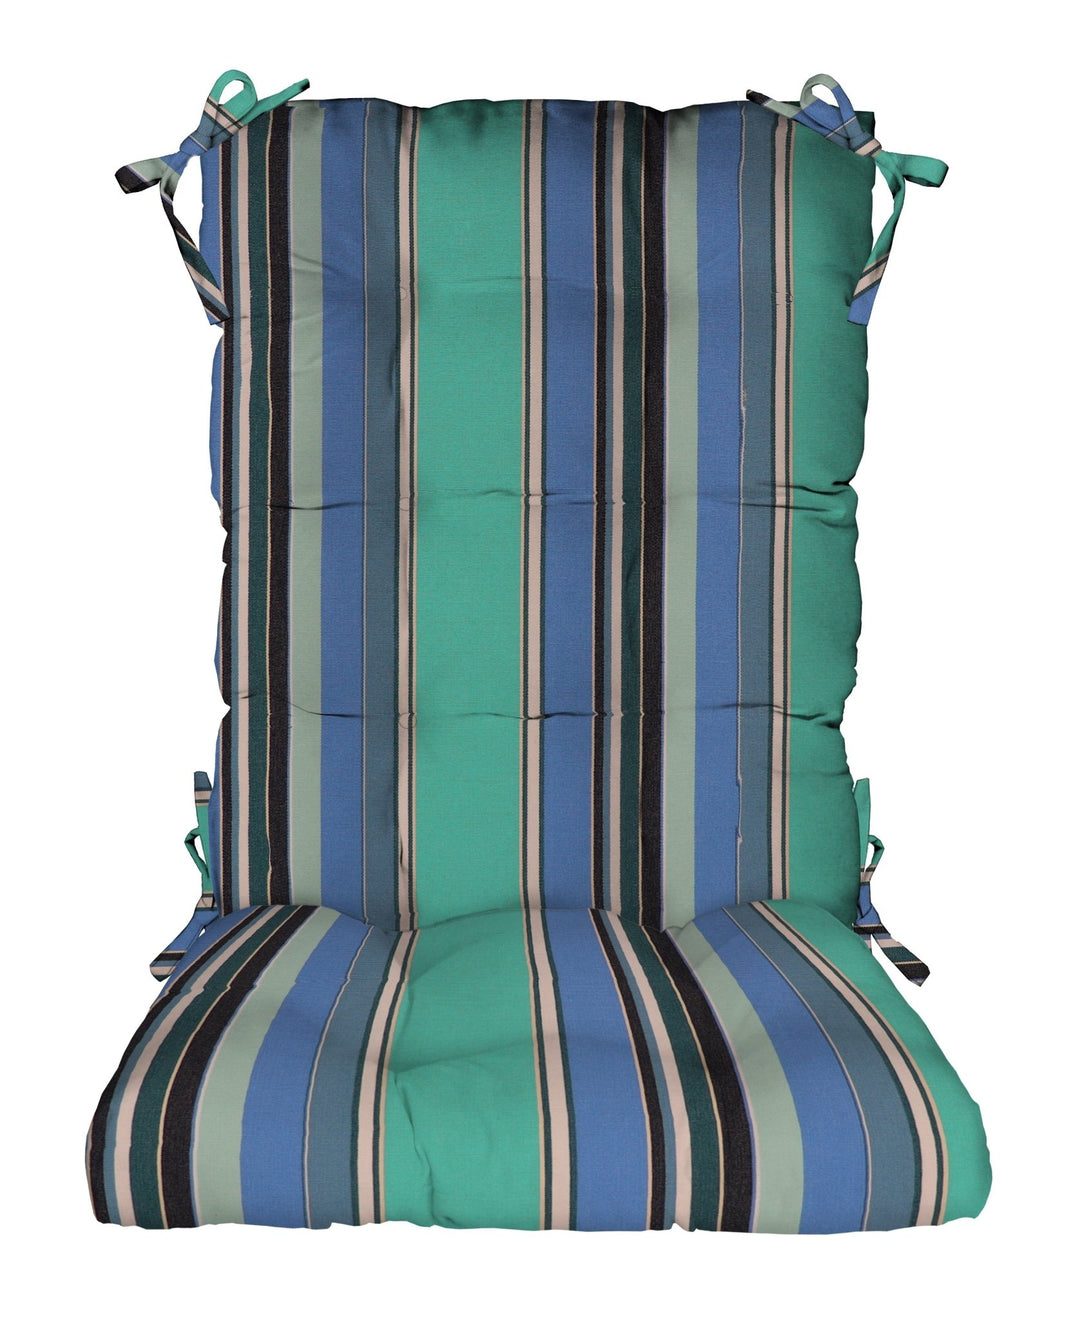 Tufted Rocker Rocking Chair Cushions, Large, Sunbrella Patterns - RSH Decor